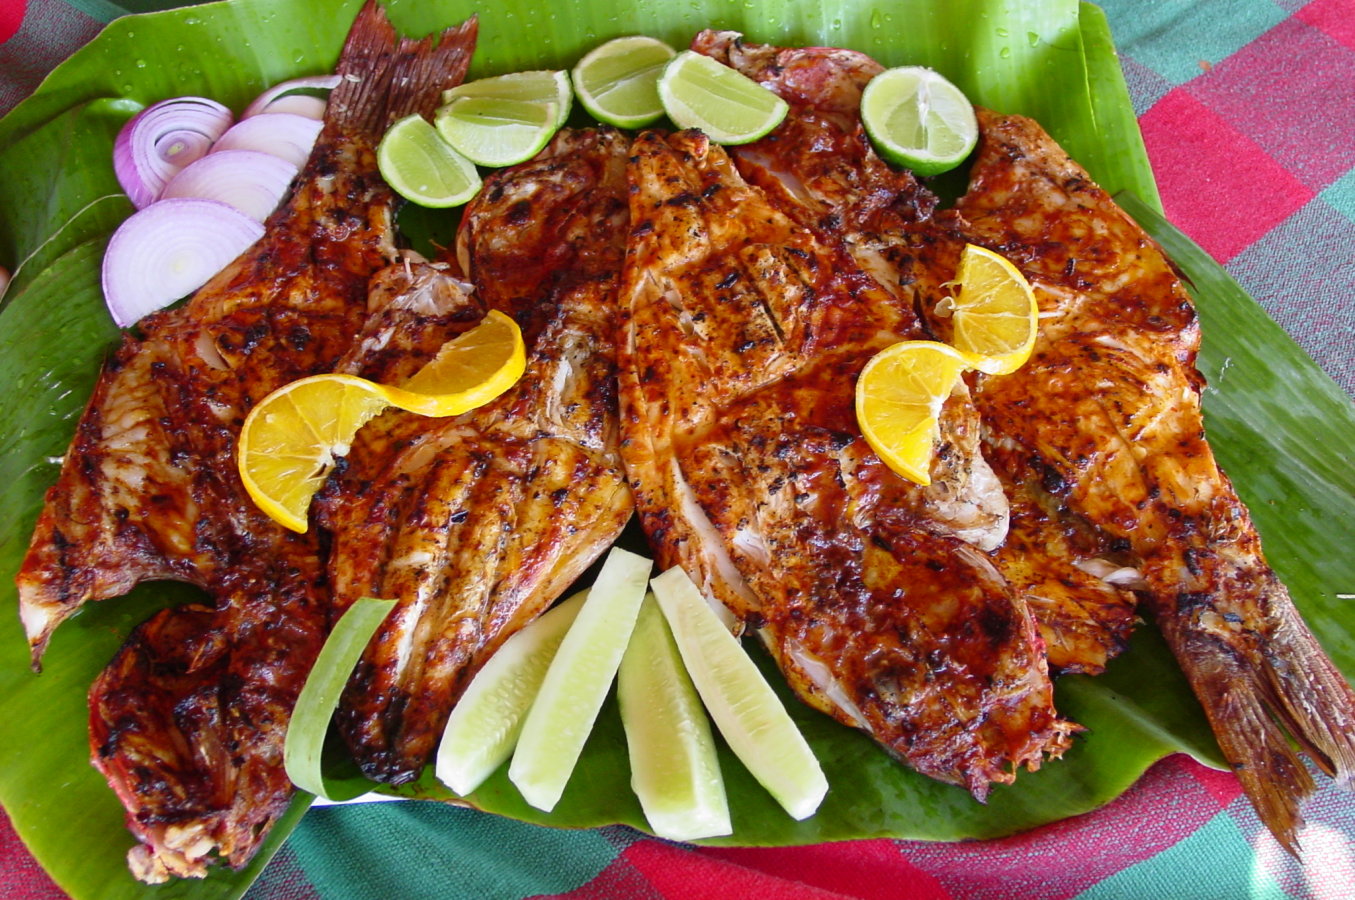 Visit Boca de Tomates and try the delicious Zarandeado fish